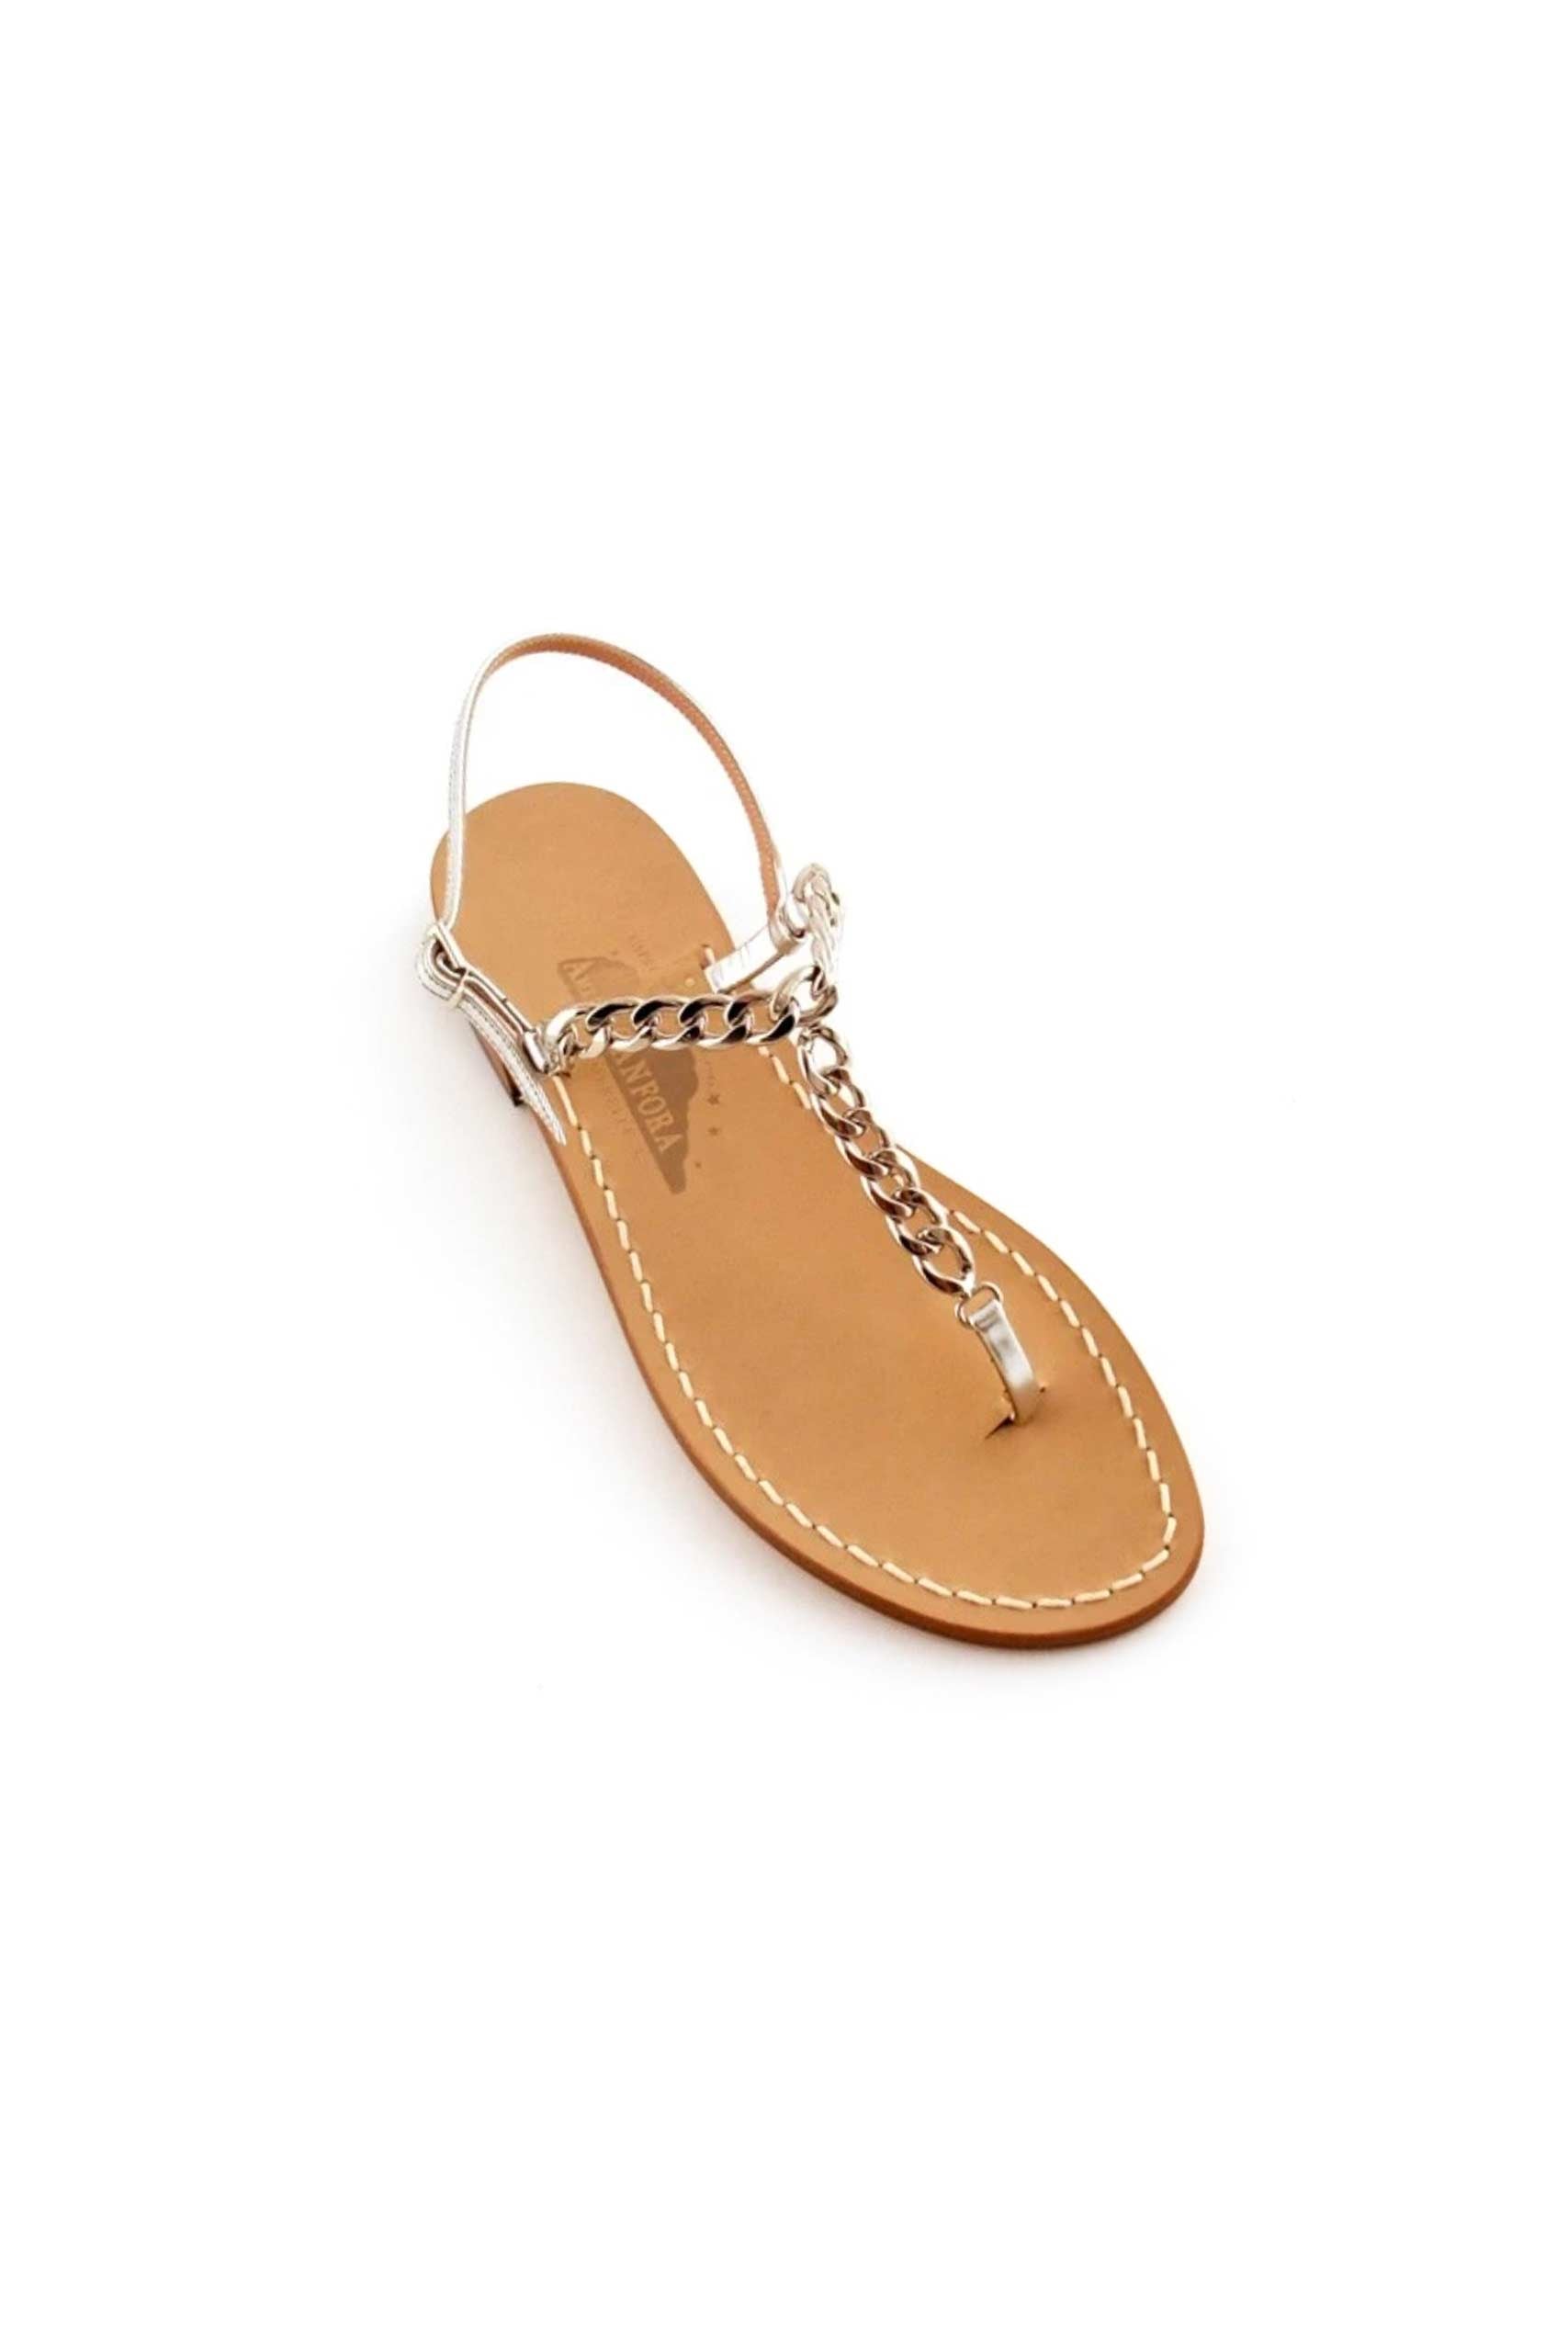 Steve Madden Jeweled Silver T-Strap Thongs Sandals Flip Flops Flats Size  8.5 | eBay